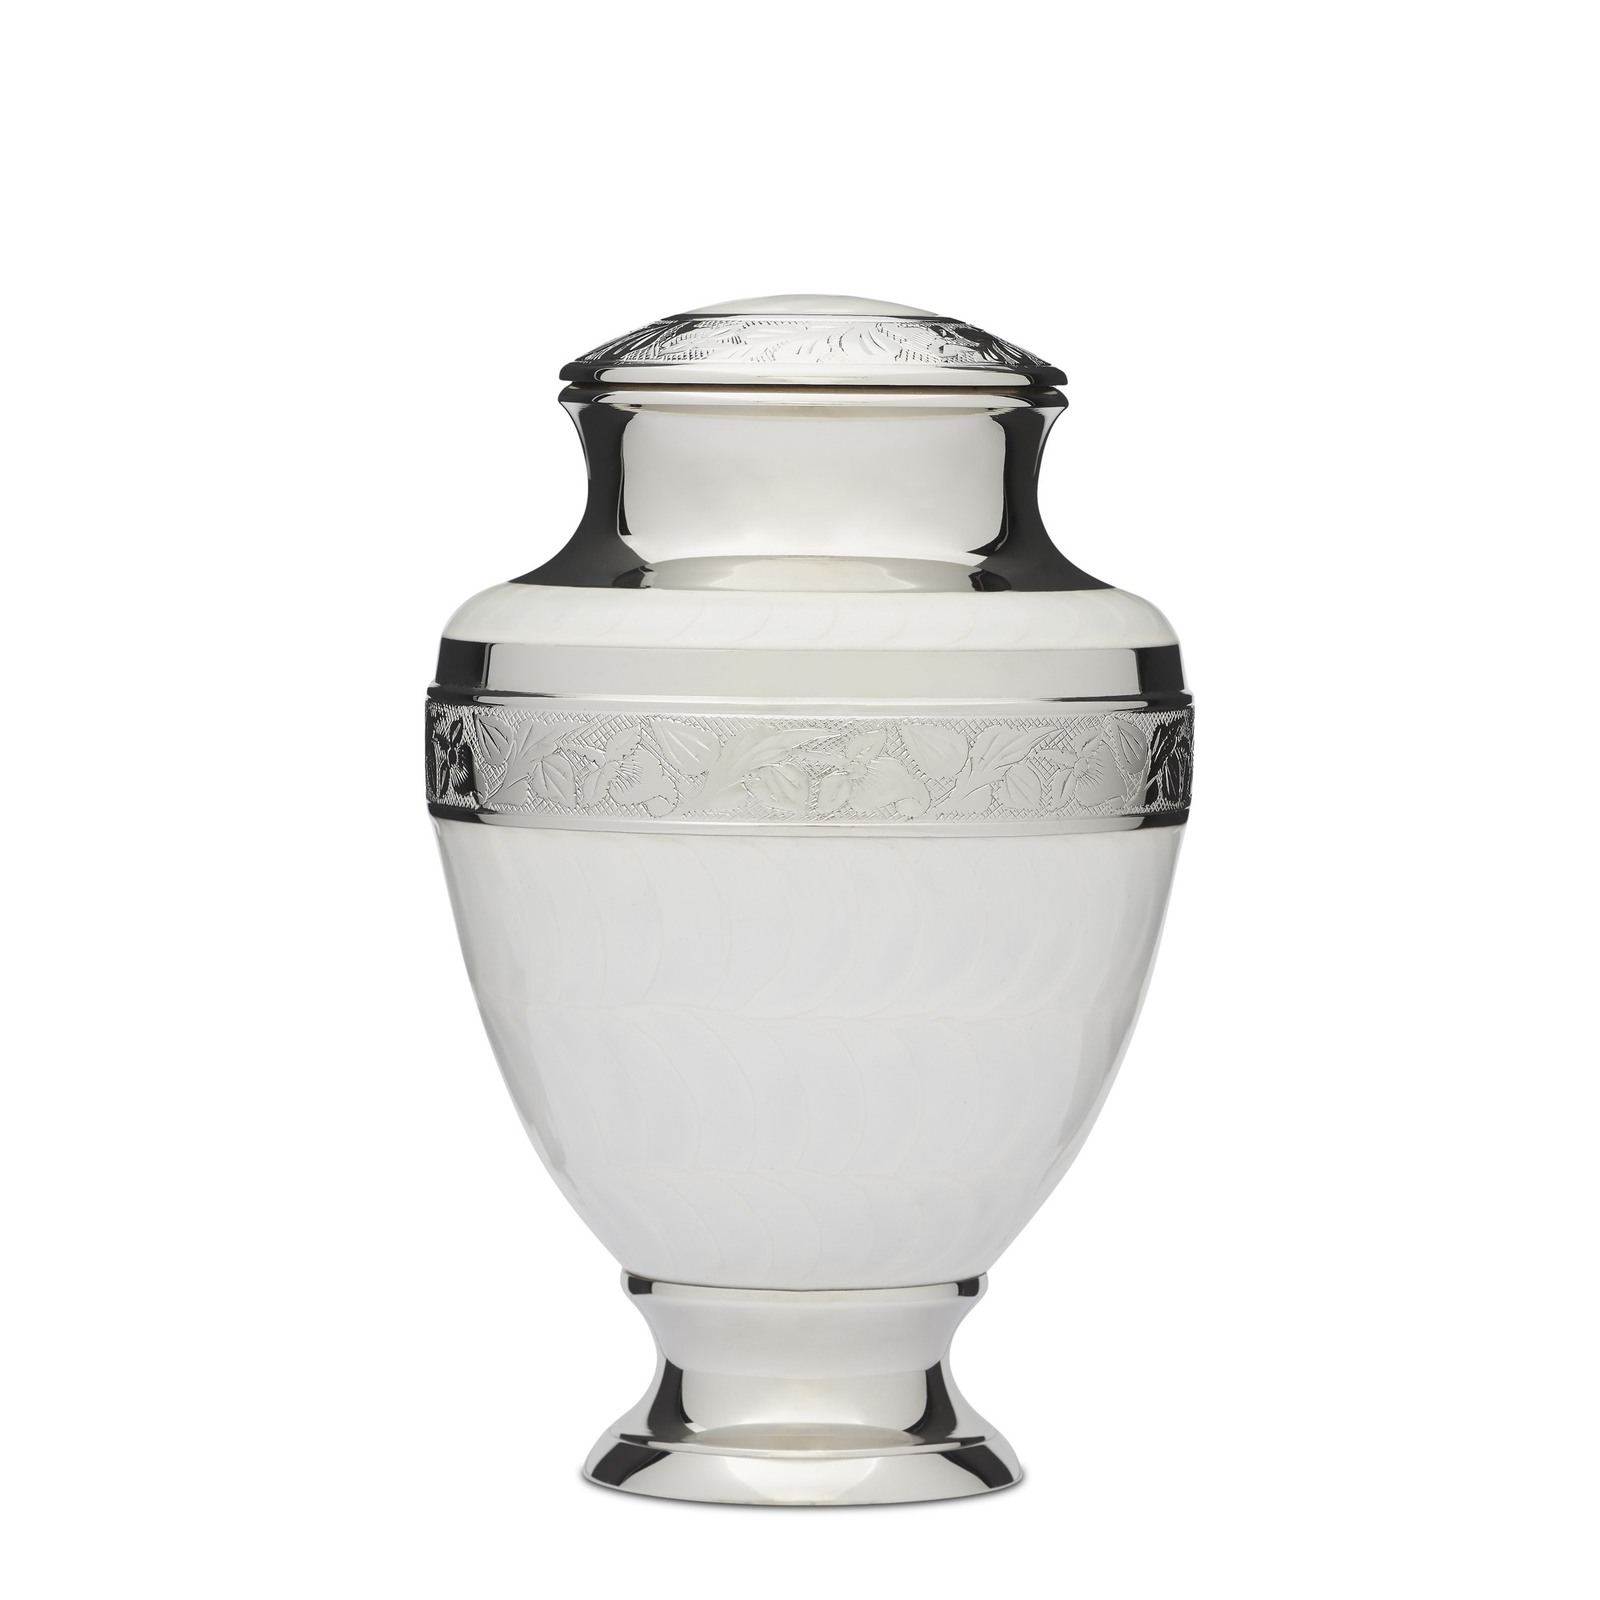 Cremation Urn- Stunning Nickel and White Enamel Funeral Cremation Urn ...